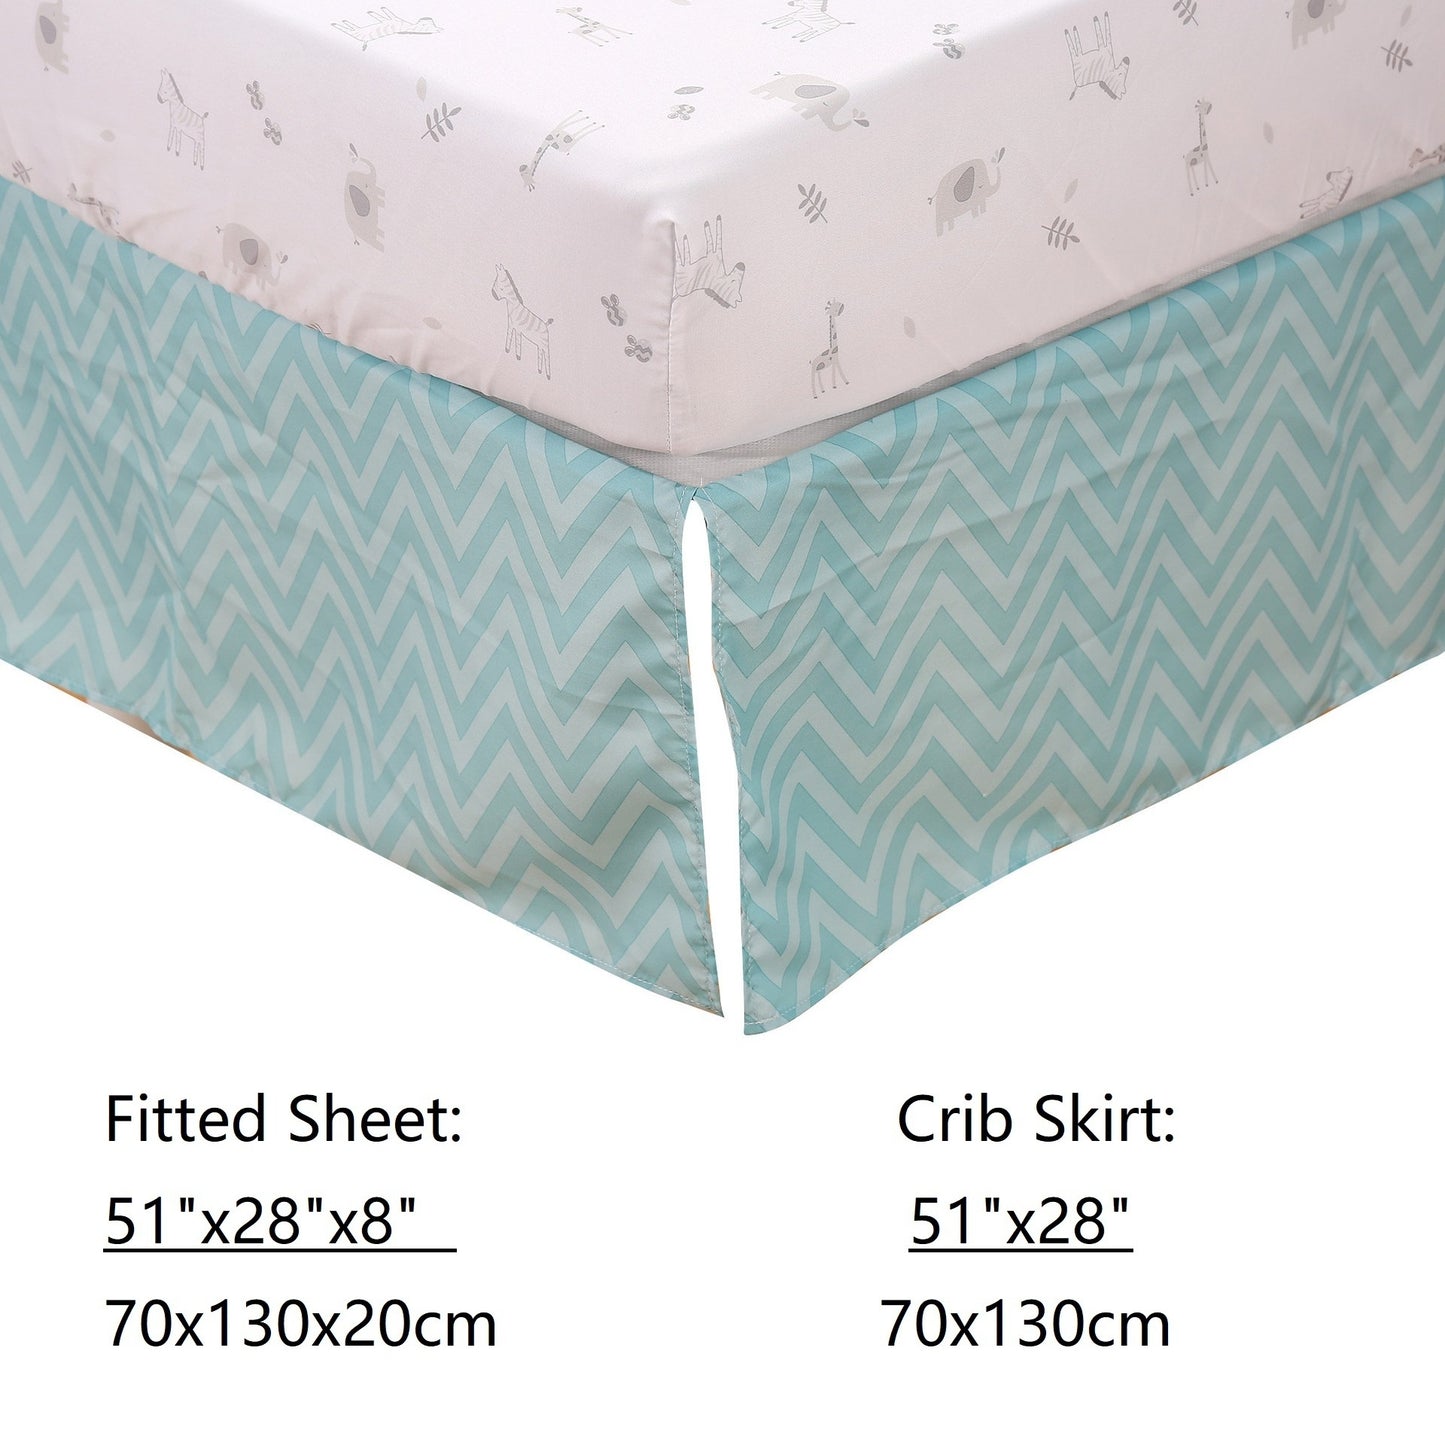 3pcs\u002Fset Giraffe Zebra Print Crib Bedding Set, Baby Bedding Set For Girl Boy Baby Crib Bedroom(1*Crib Skirt + 1*Quilt + 1*Fitted Sheet)